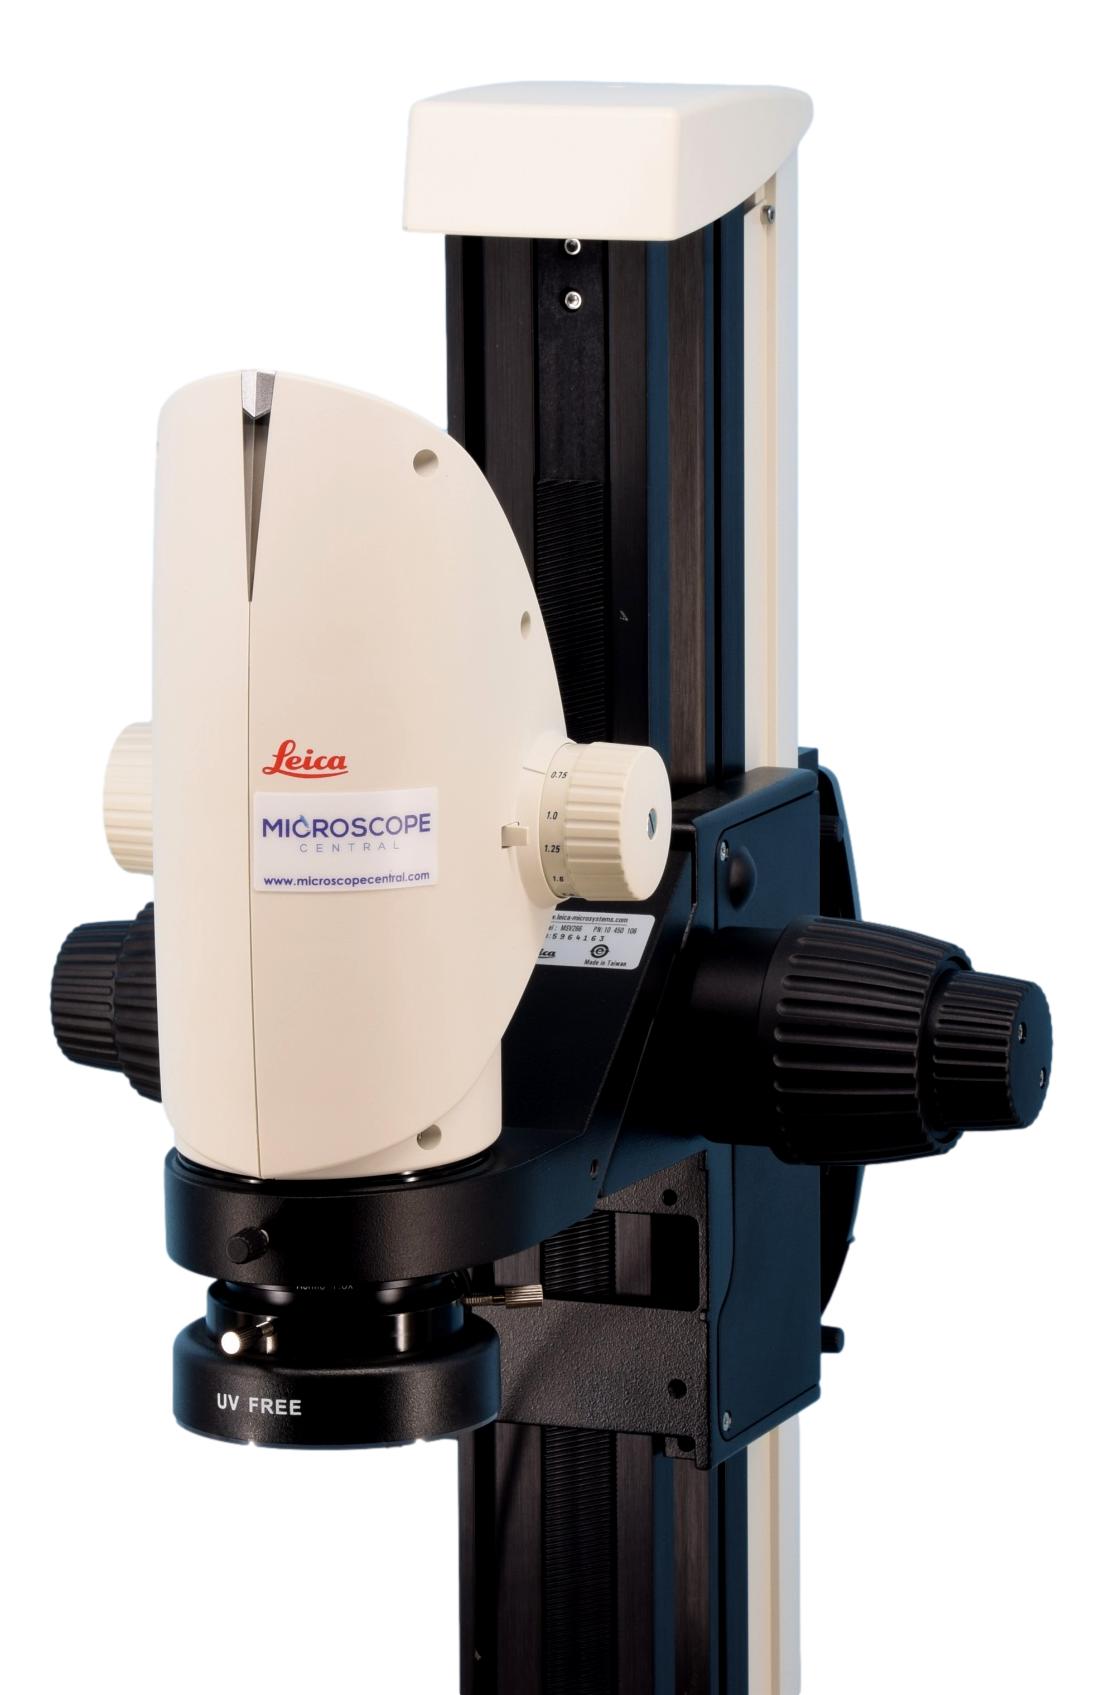 Leica DMS300 Microscope